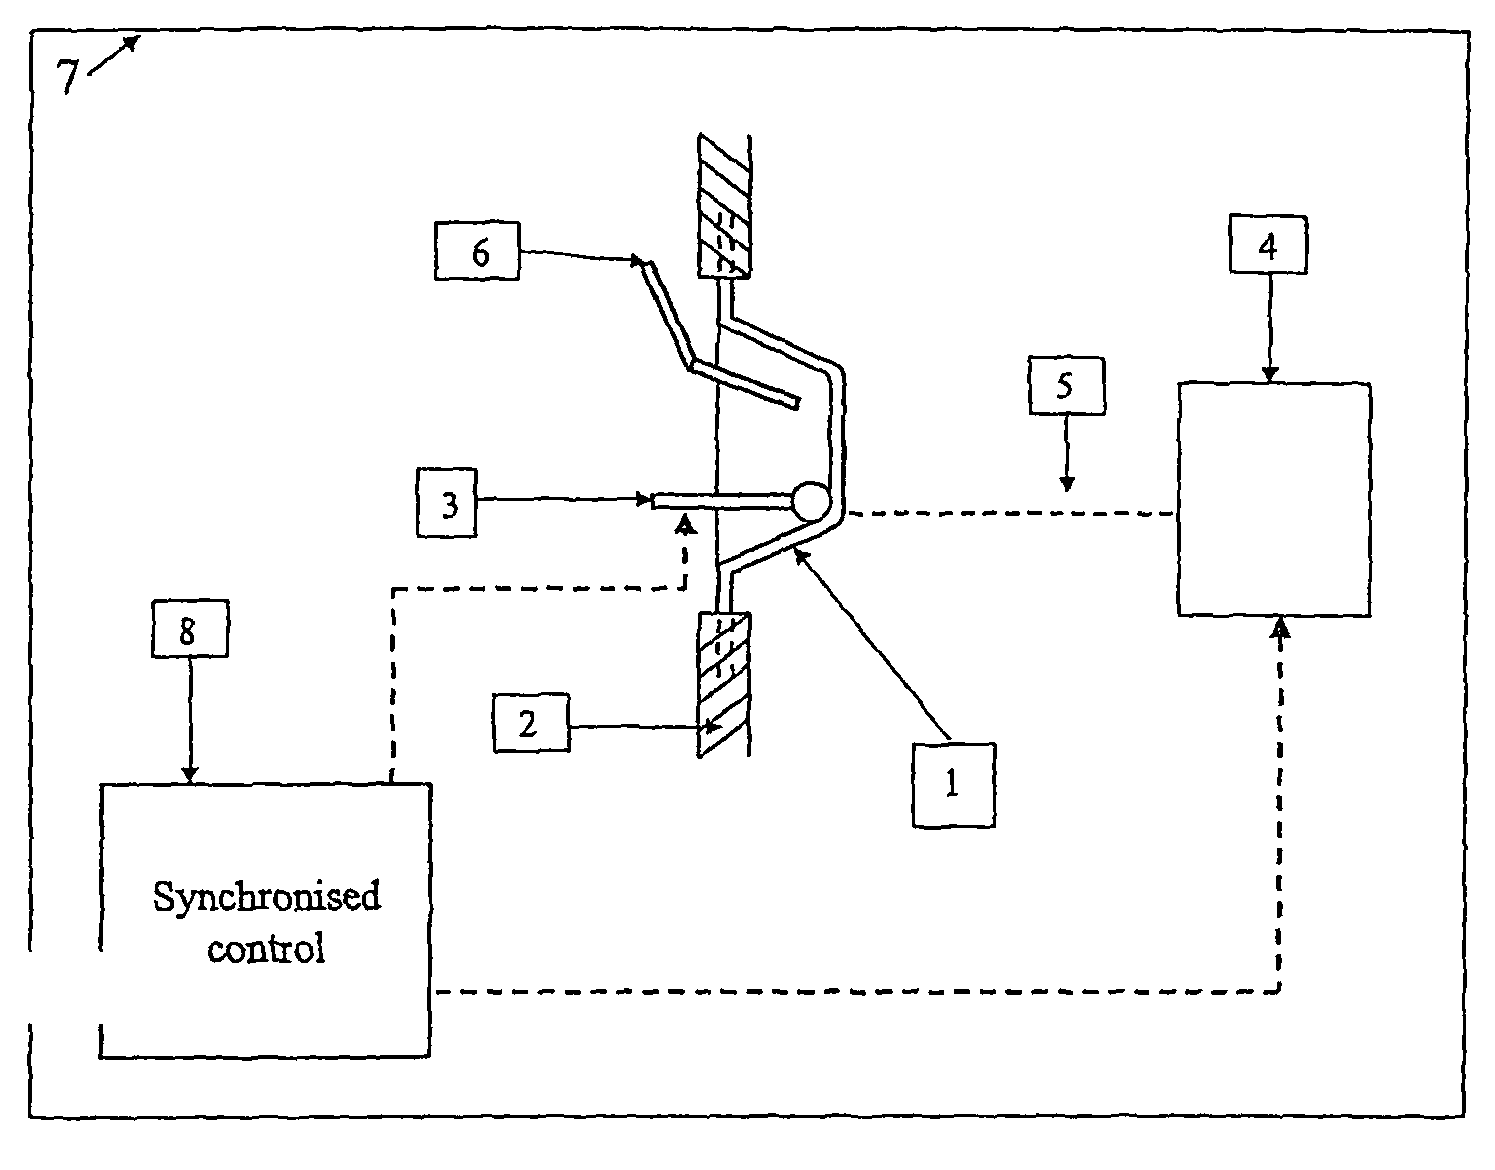 Asymmetric incremental sheet forming system